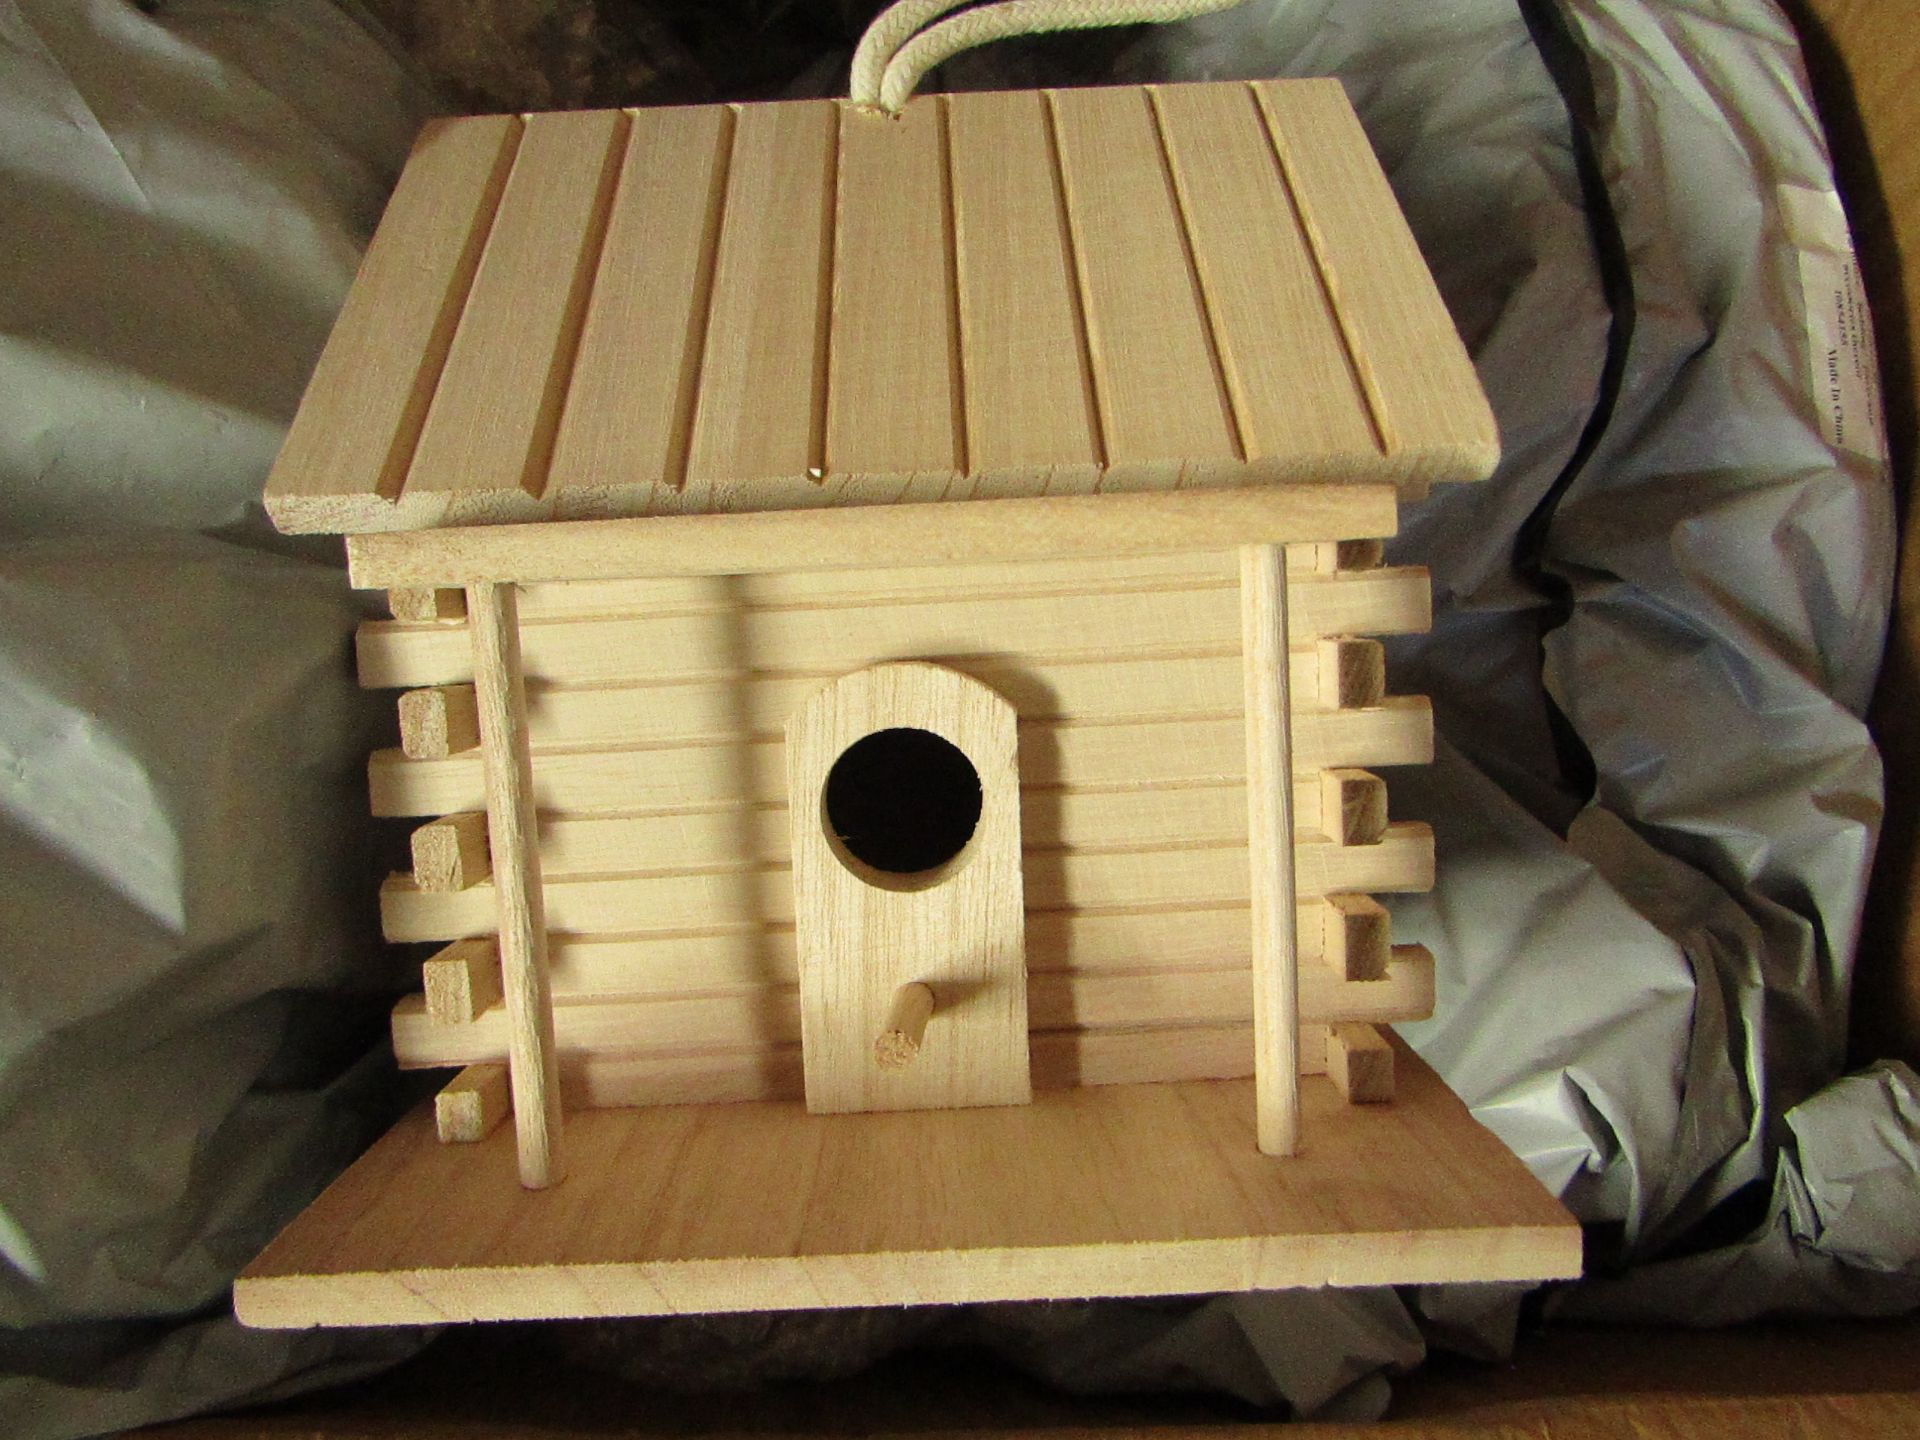 2Pcs Practical Bird Nest Hanging Bird Room Birds Hut Bed Outdoor Birds Accessory, new and packaged.